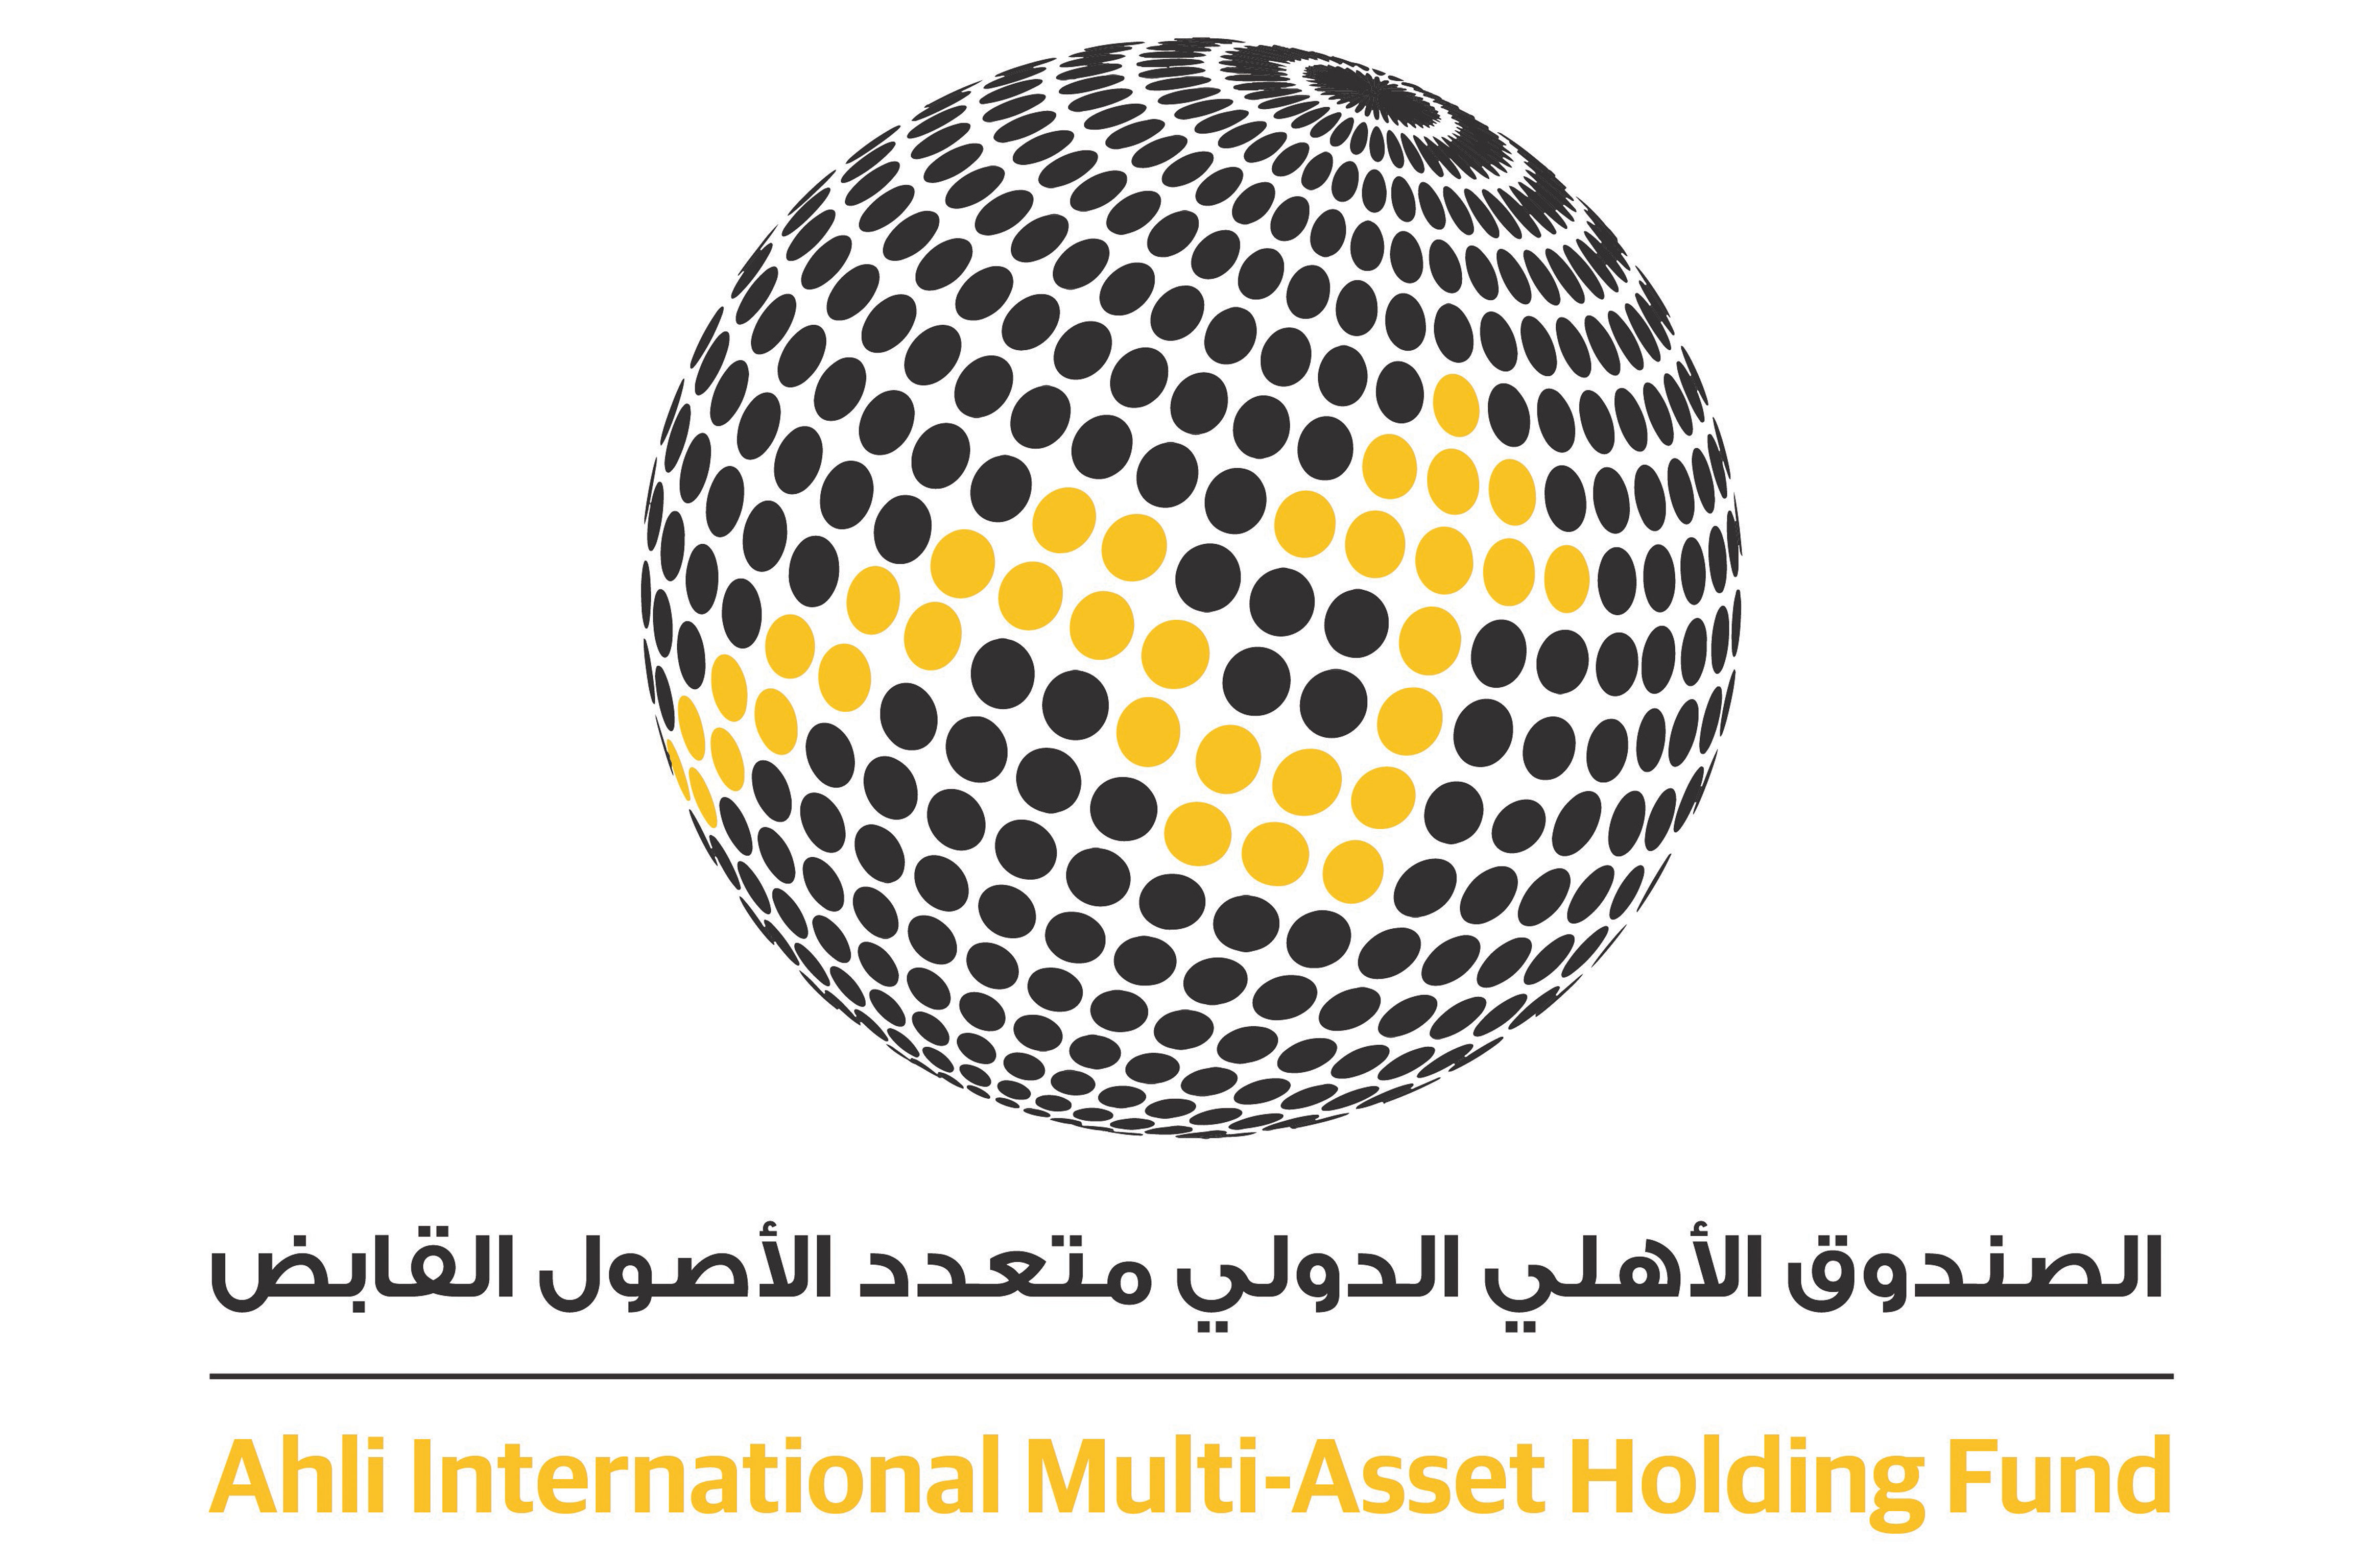 Notification to Ahli International Multi-Asset Holding Fund unit holders